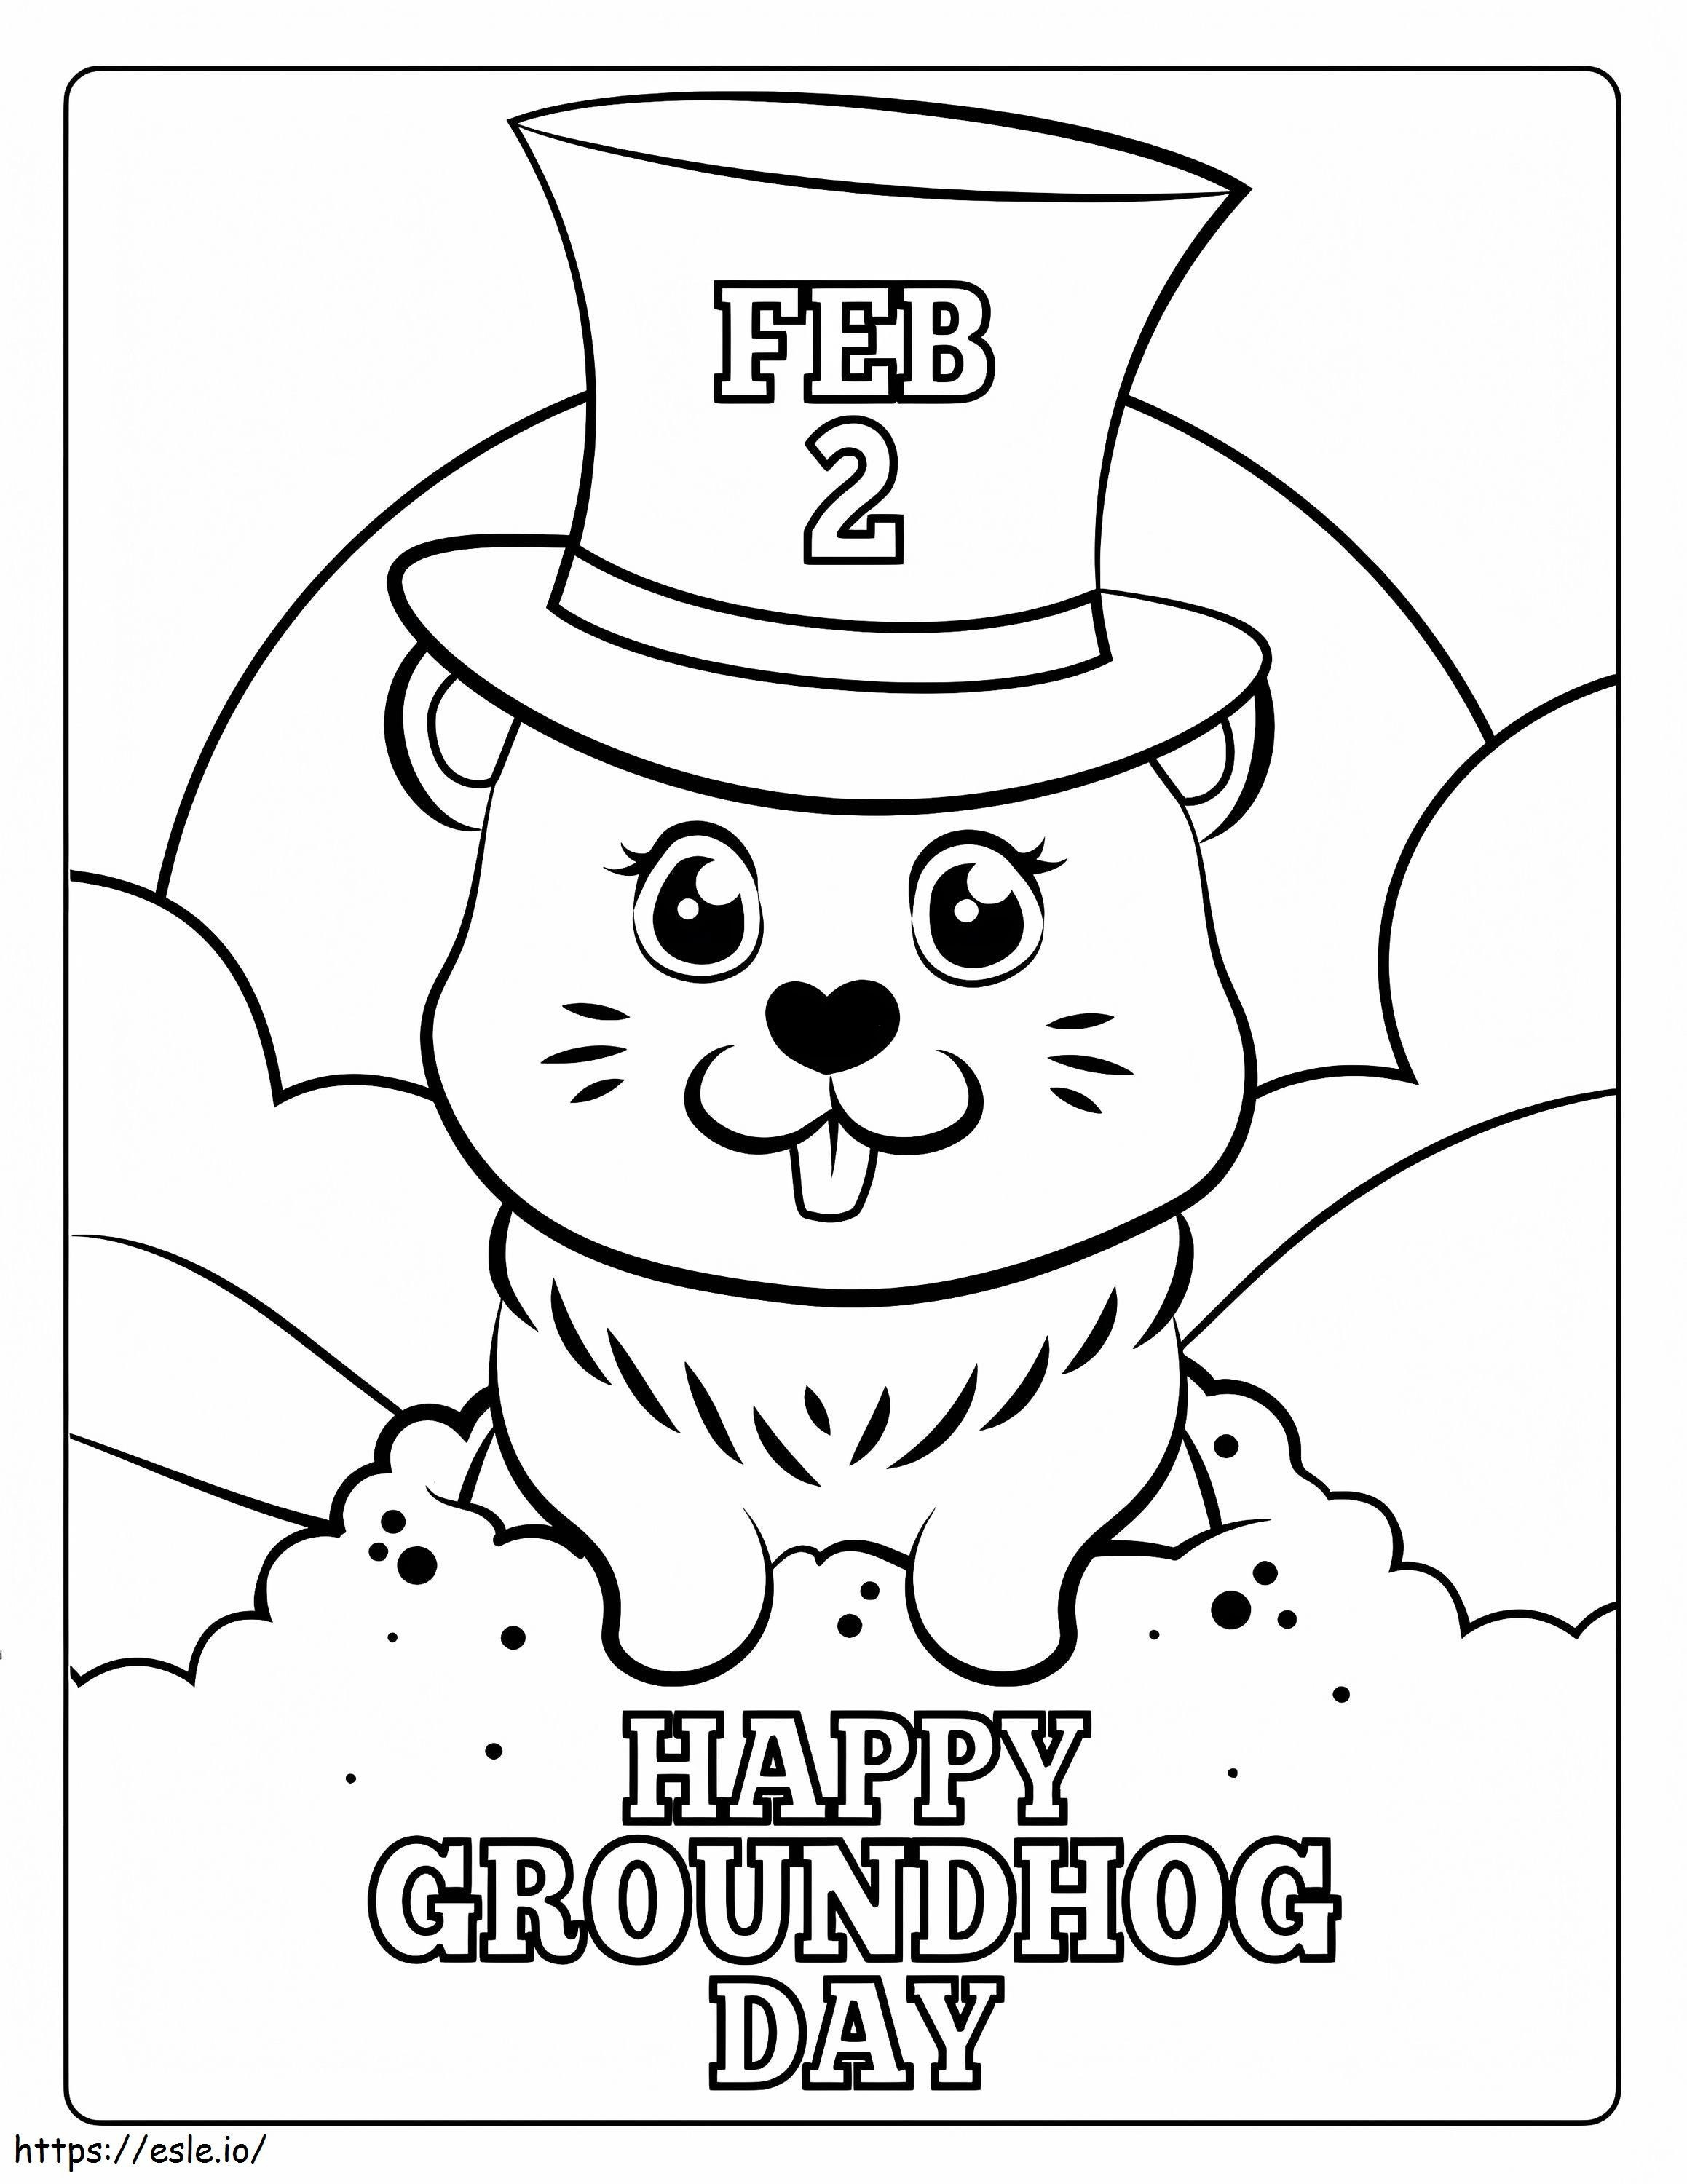 Groundhog 3. Gün boyama